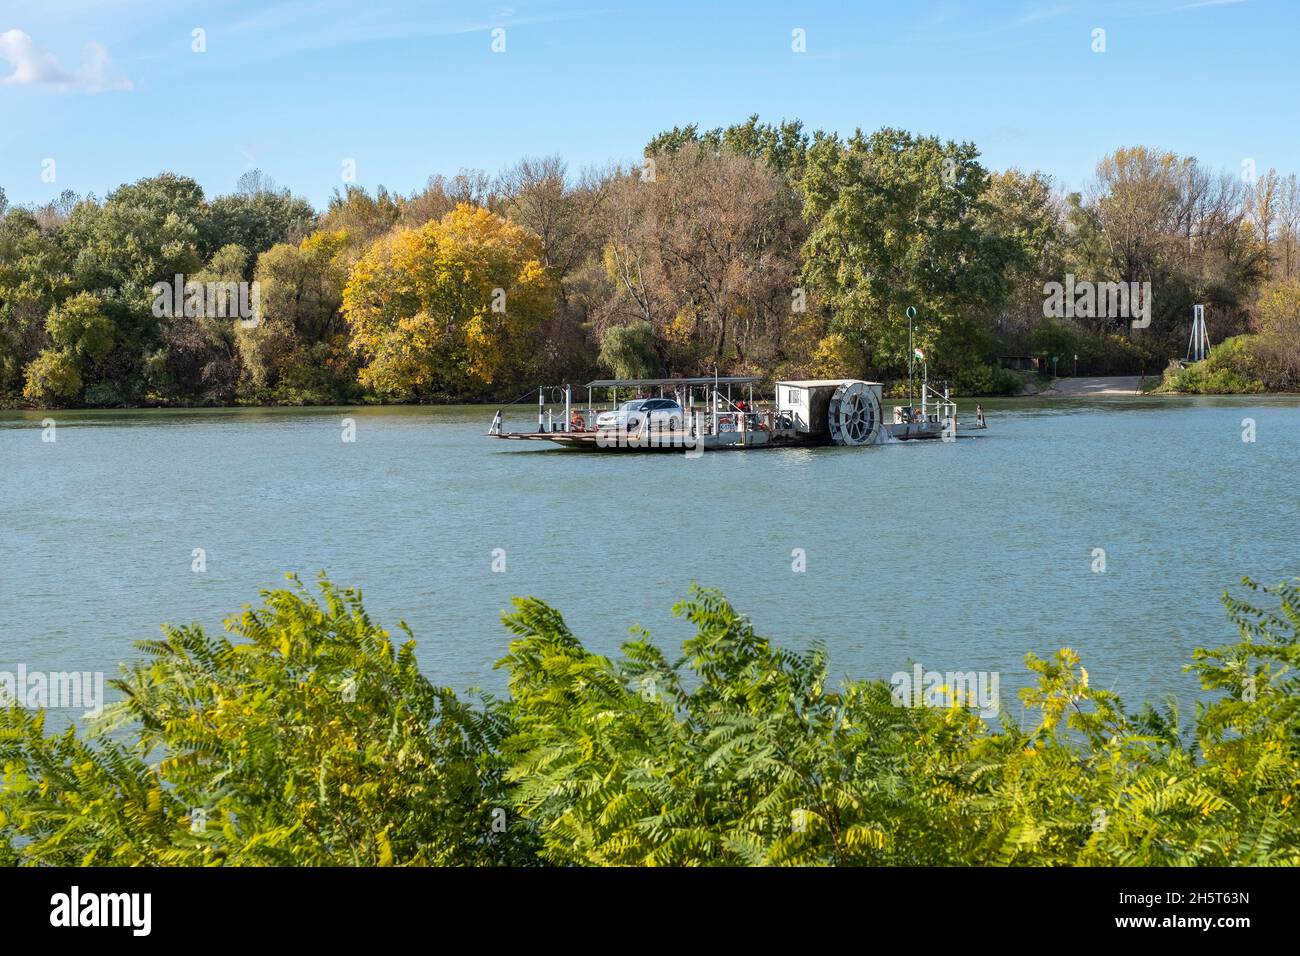 Ferry transporing cars and passengers across river Tiszaon asunny autumn day,  Tiszacsege, Hungary, Hungary Stock Photo